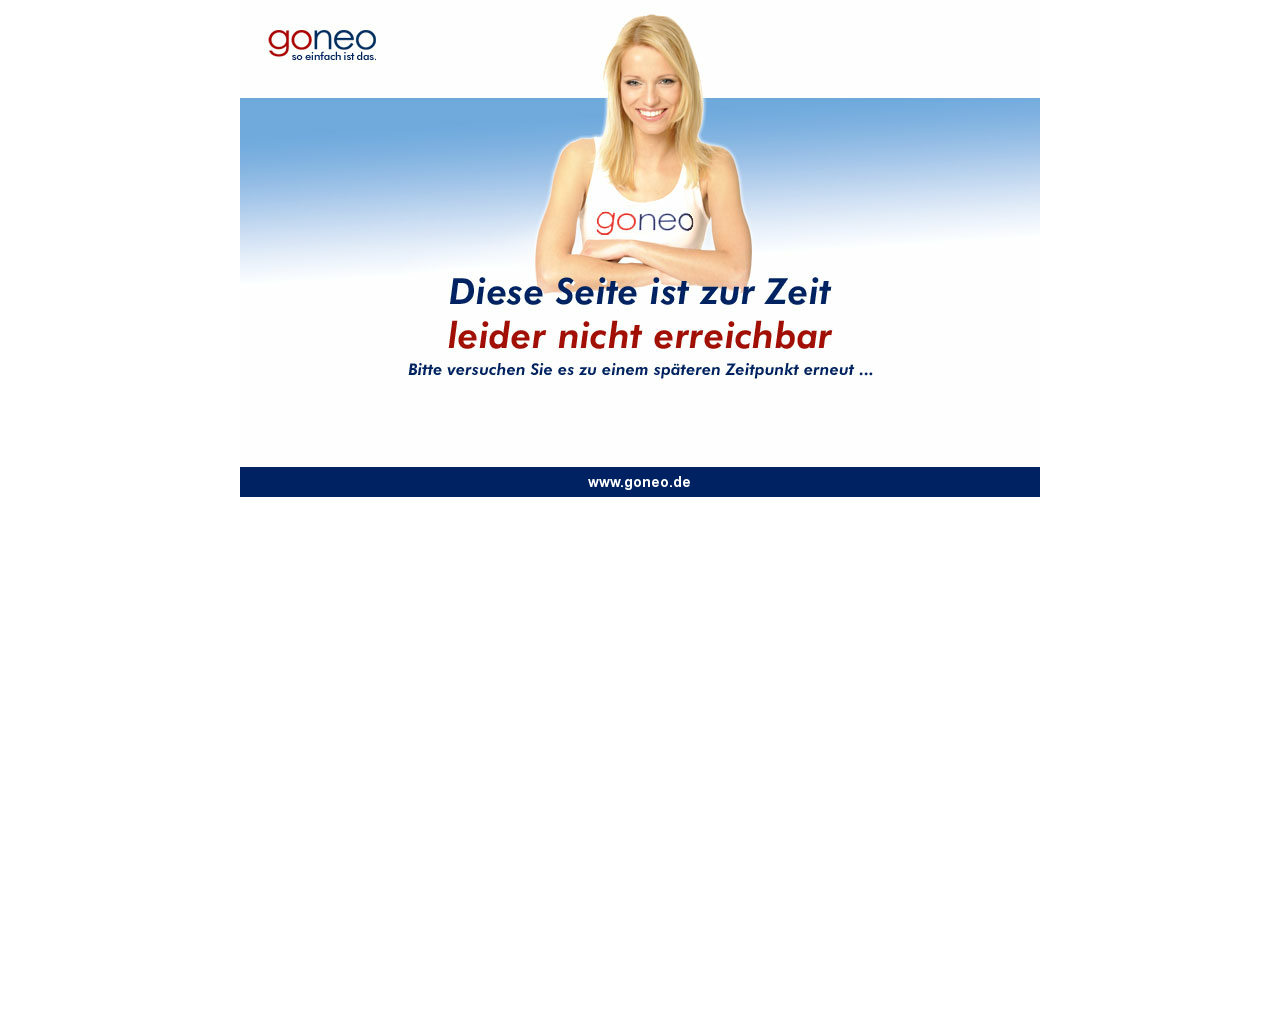 Bild Website rheinhausen-tko.de in 1280x1024